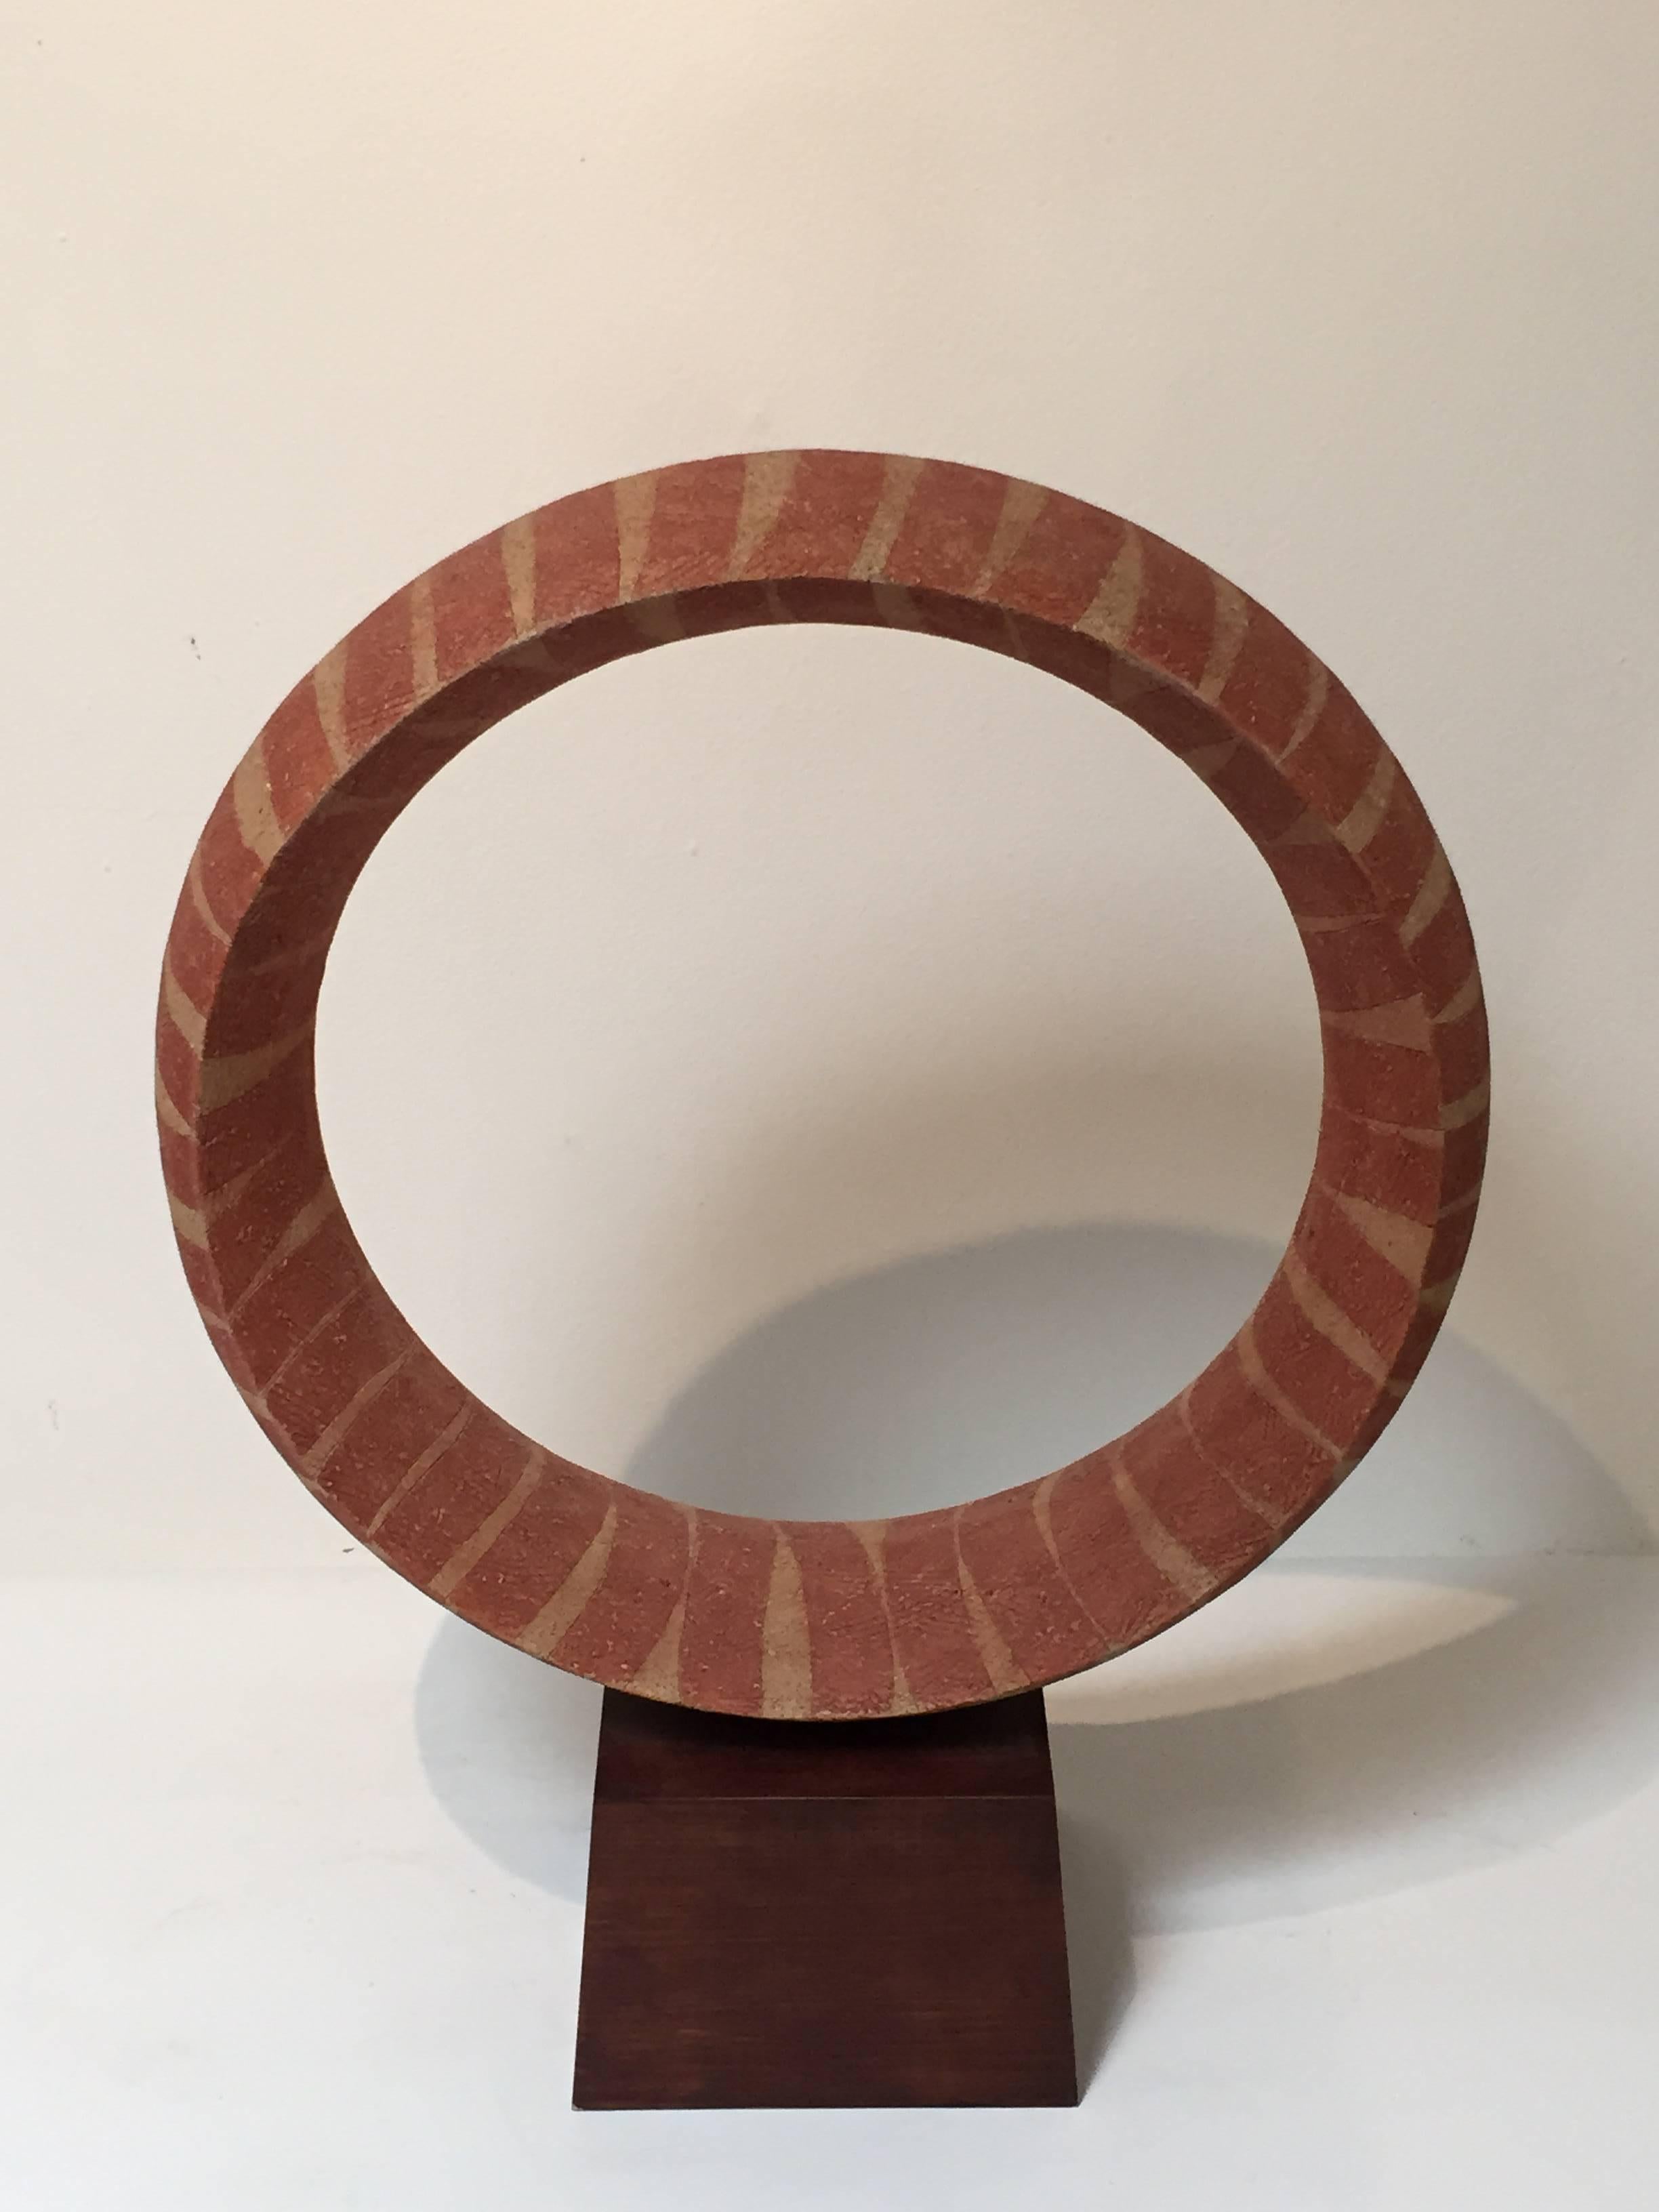 Japanese Contemporary Ceramic Circle Sculpture by Kako Katsumi